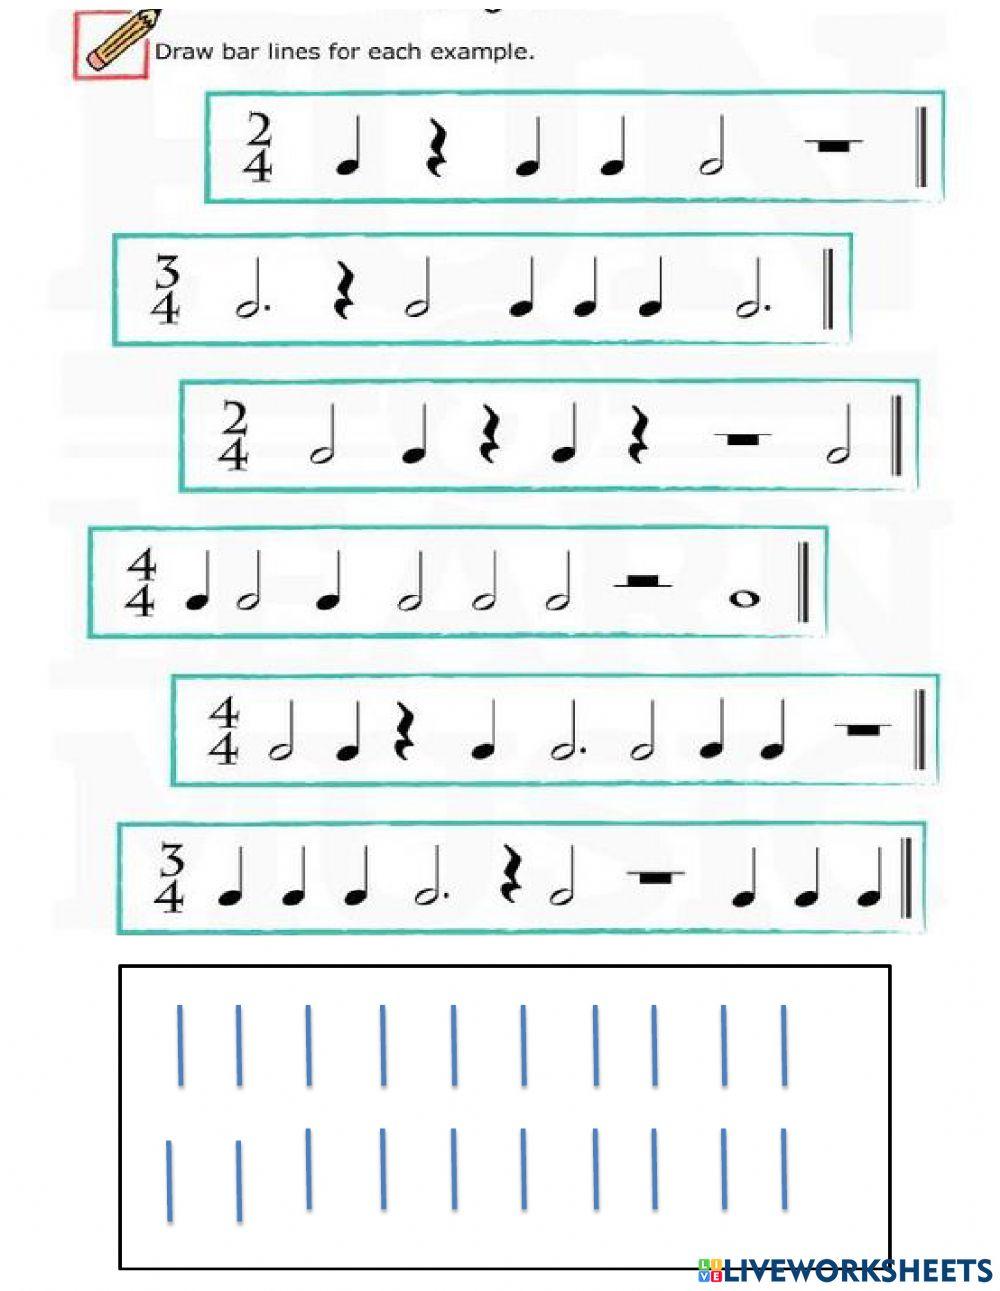 Rhythmic Pattern and Bar lines